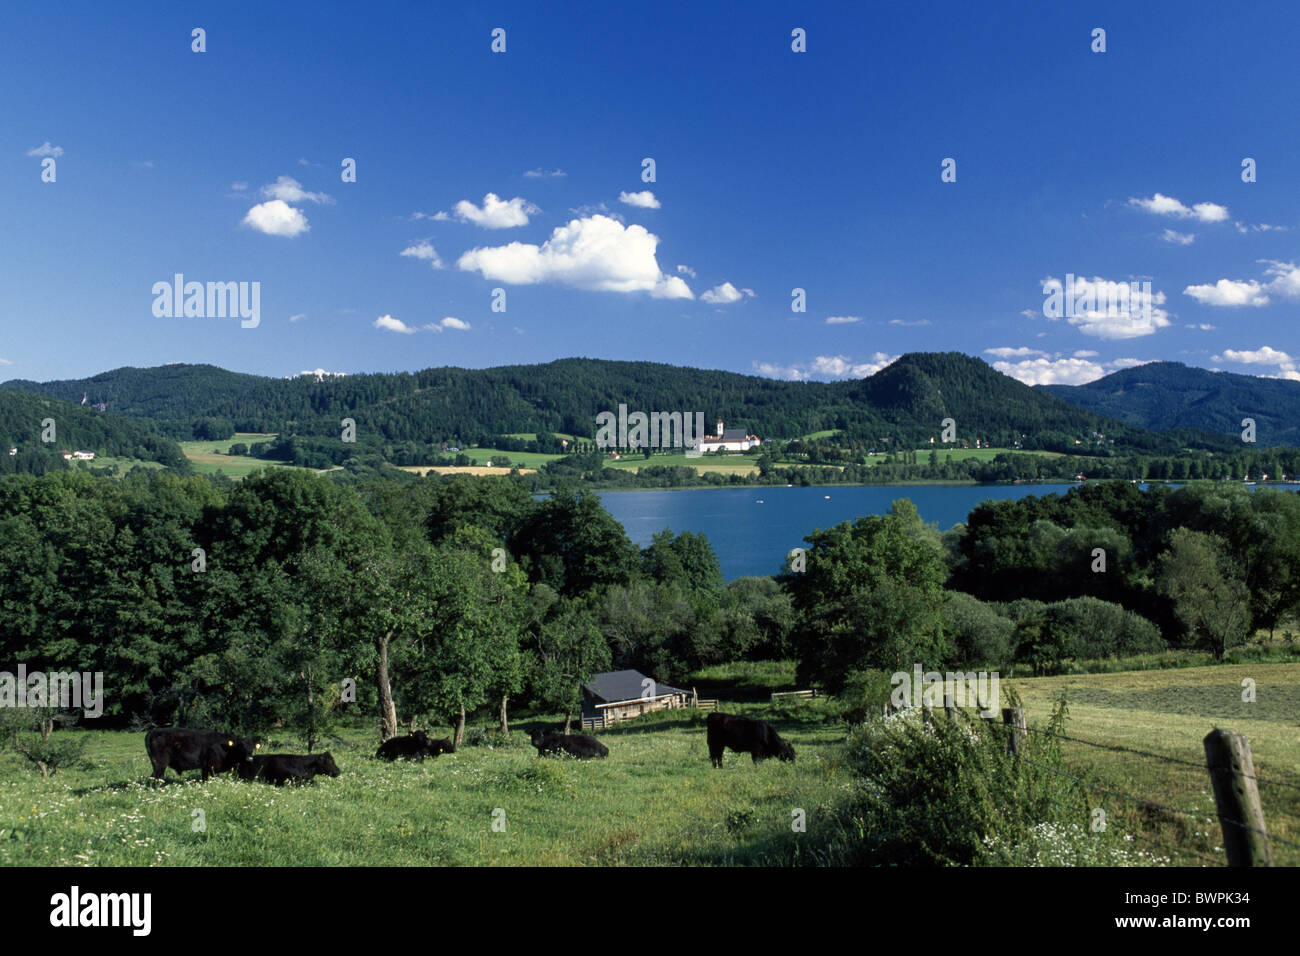 Austria Europe Sankt Georgen Langsee Karnten State of Carintiha Europe landscape forest cattle green summer Stock Photo